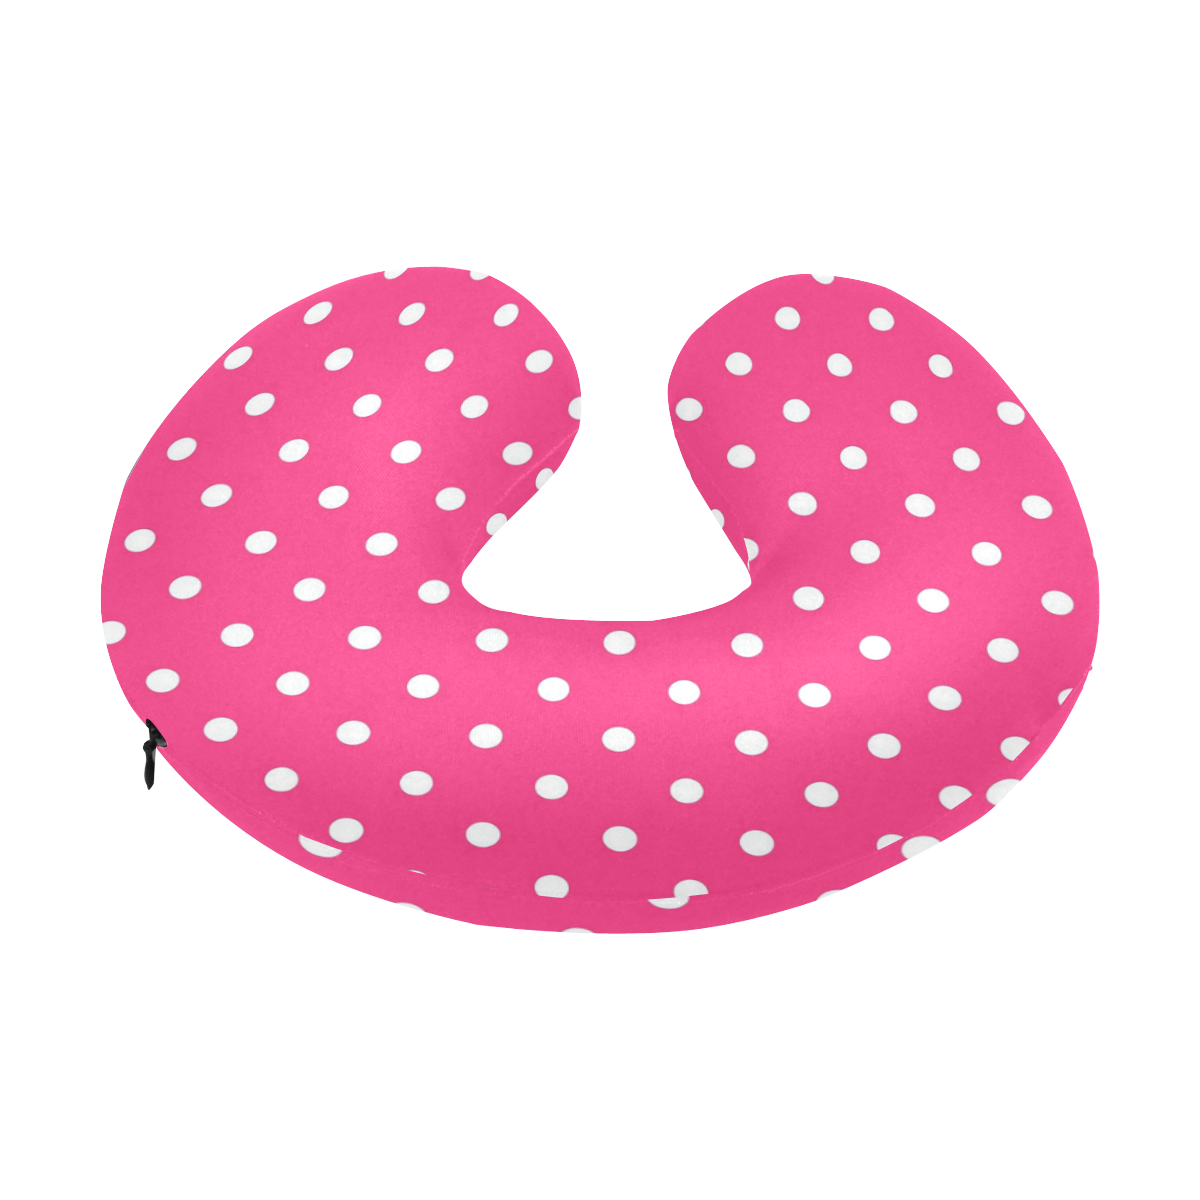 Hot Pink White Dots U-Shape Travel Pillow